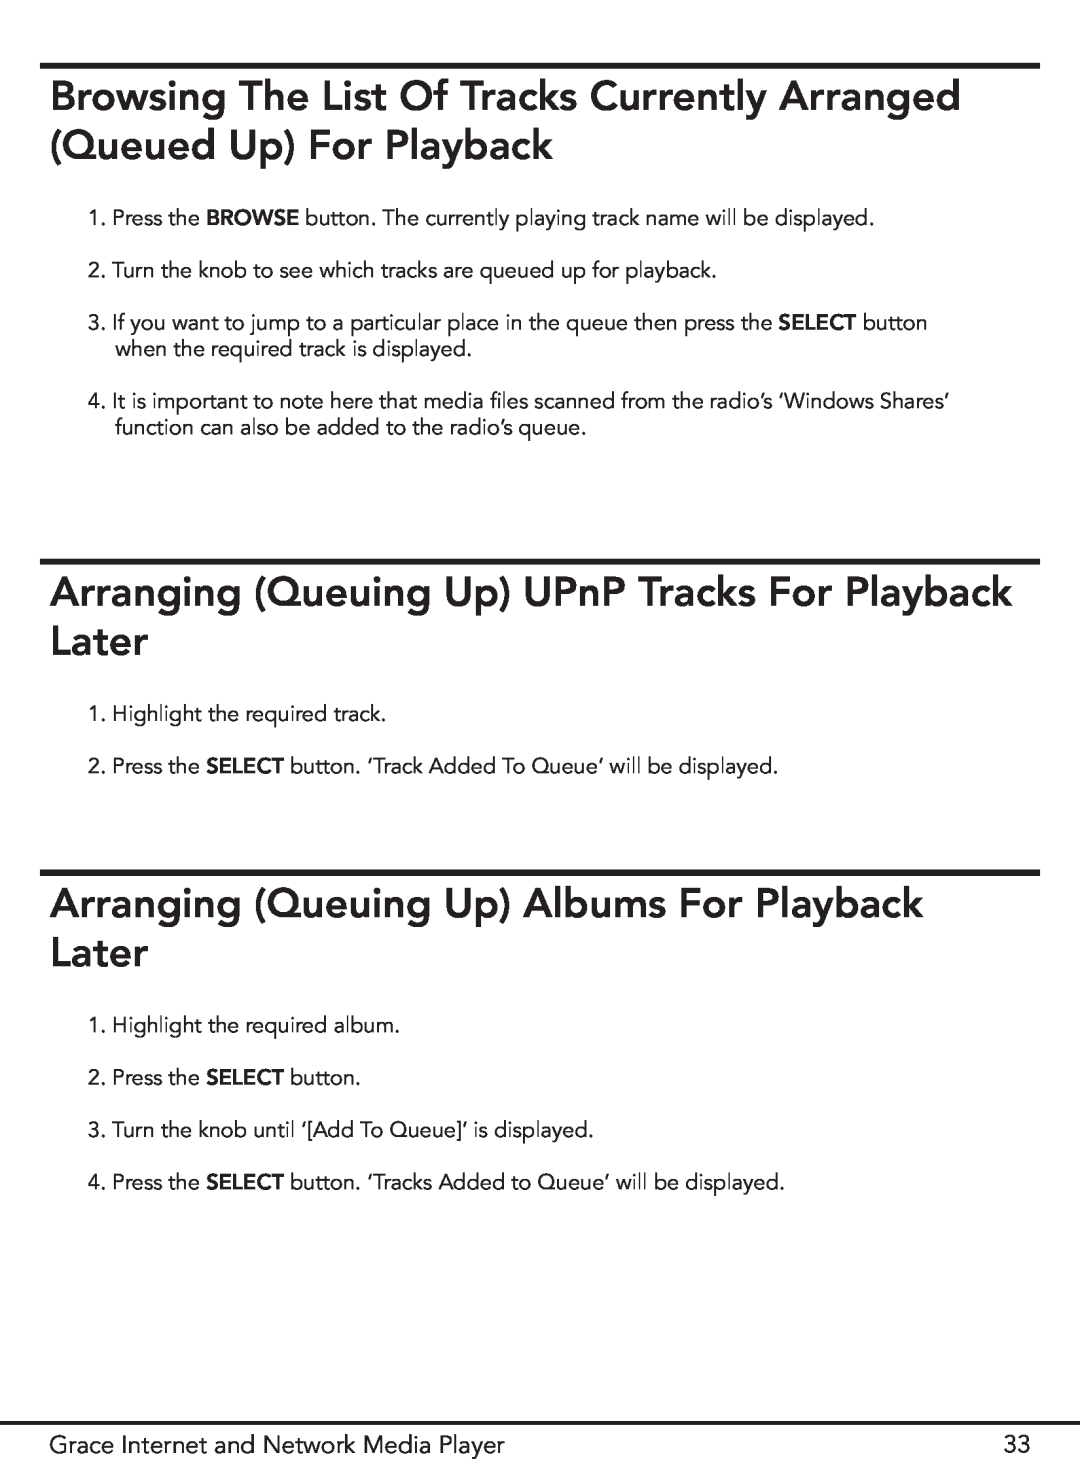 Grace GDI-IR3000 manual Arranging Queuing Up Albums For Playback Later 